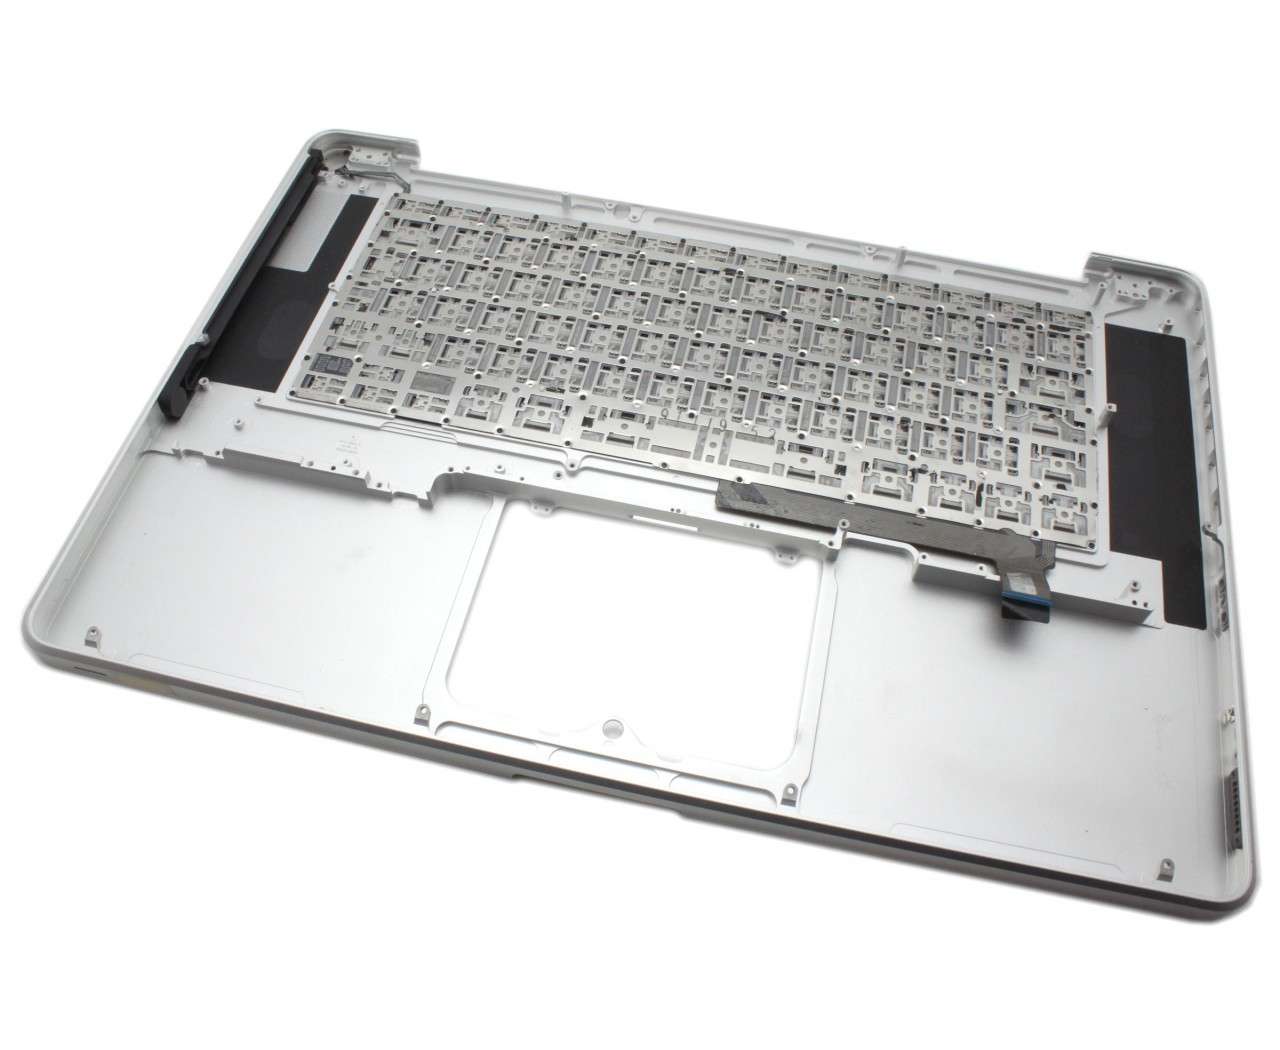 Tastatura Apple MacBook Pro 15 MC026LL A Neagra cu Palmrest Argintiu Refurbished Apple Apple